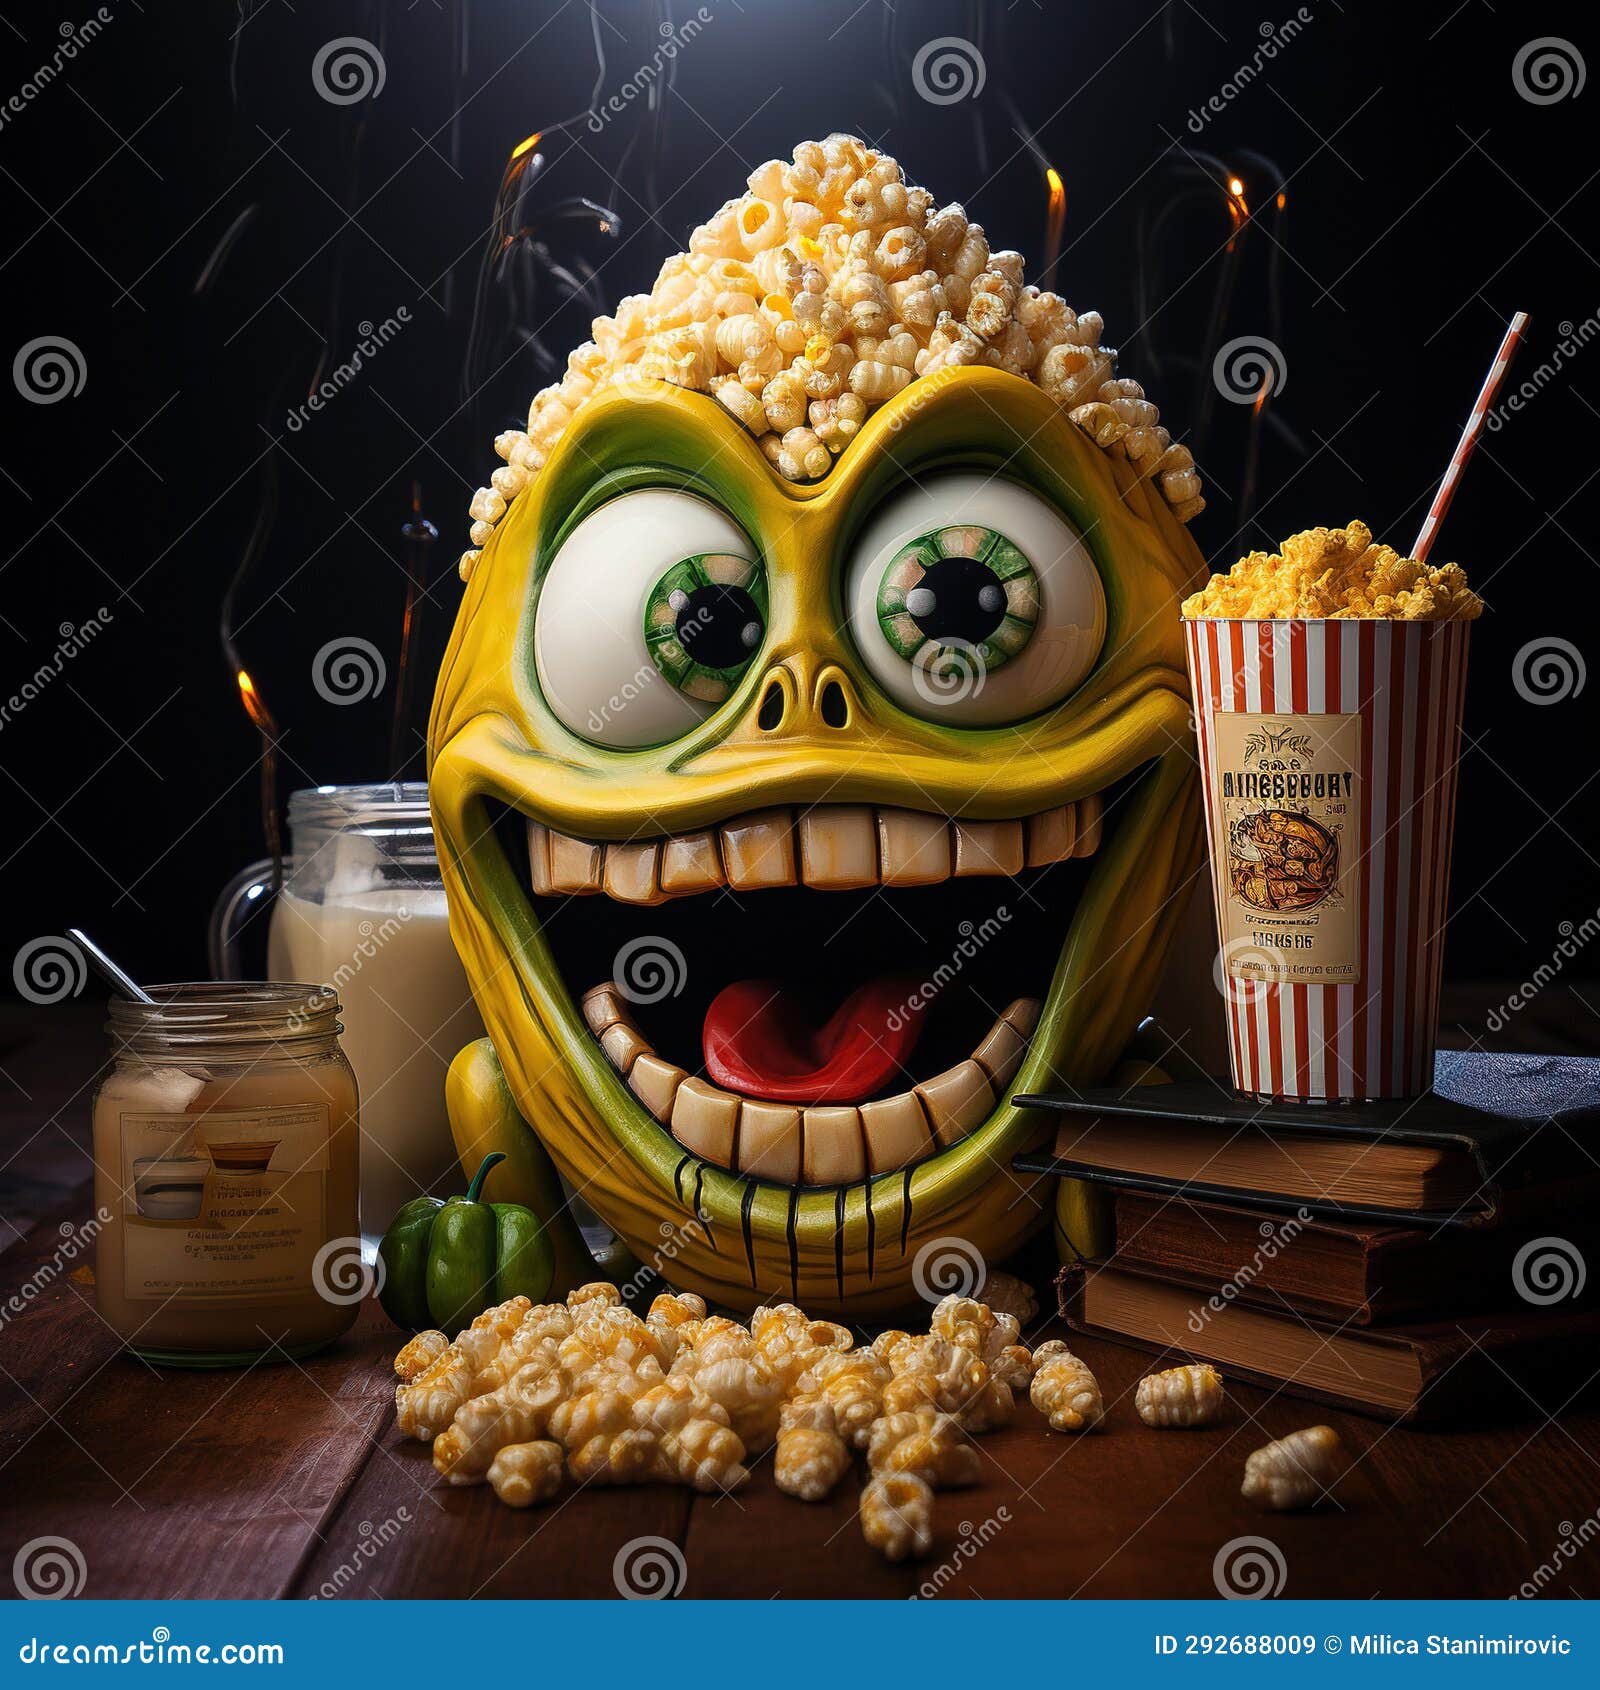 Download Crazy Popcorn, Popcorn, Crazy. Royalty-Free Vector Graphic -  Pixabay